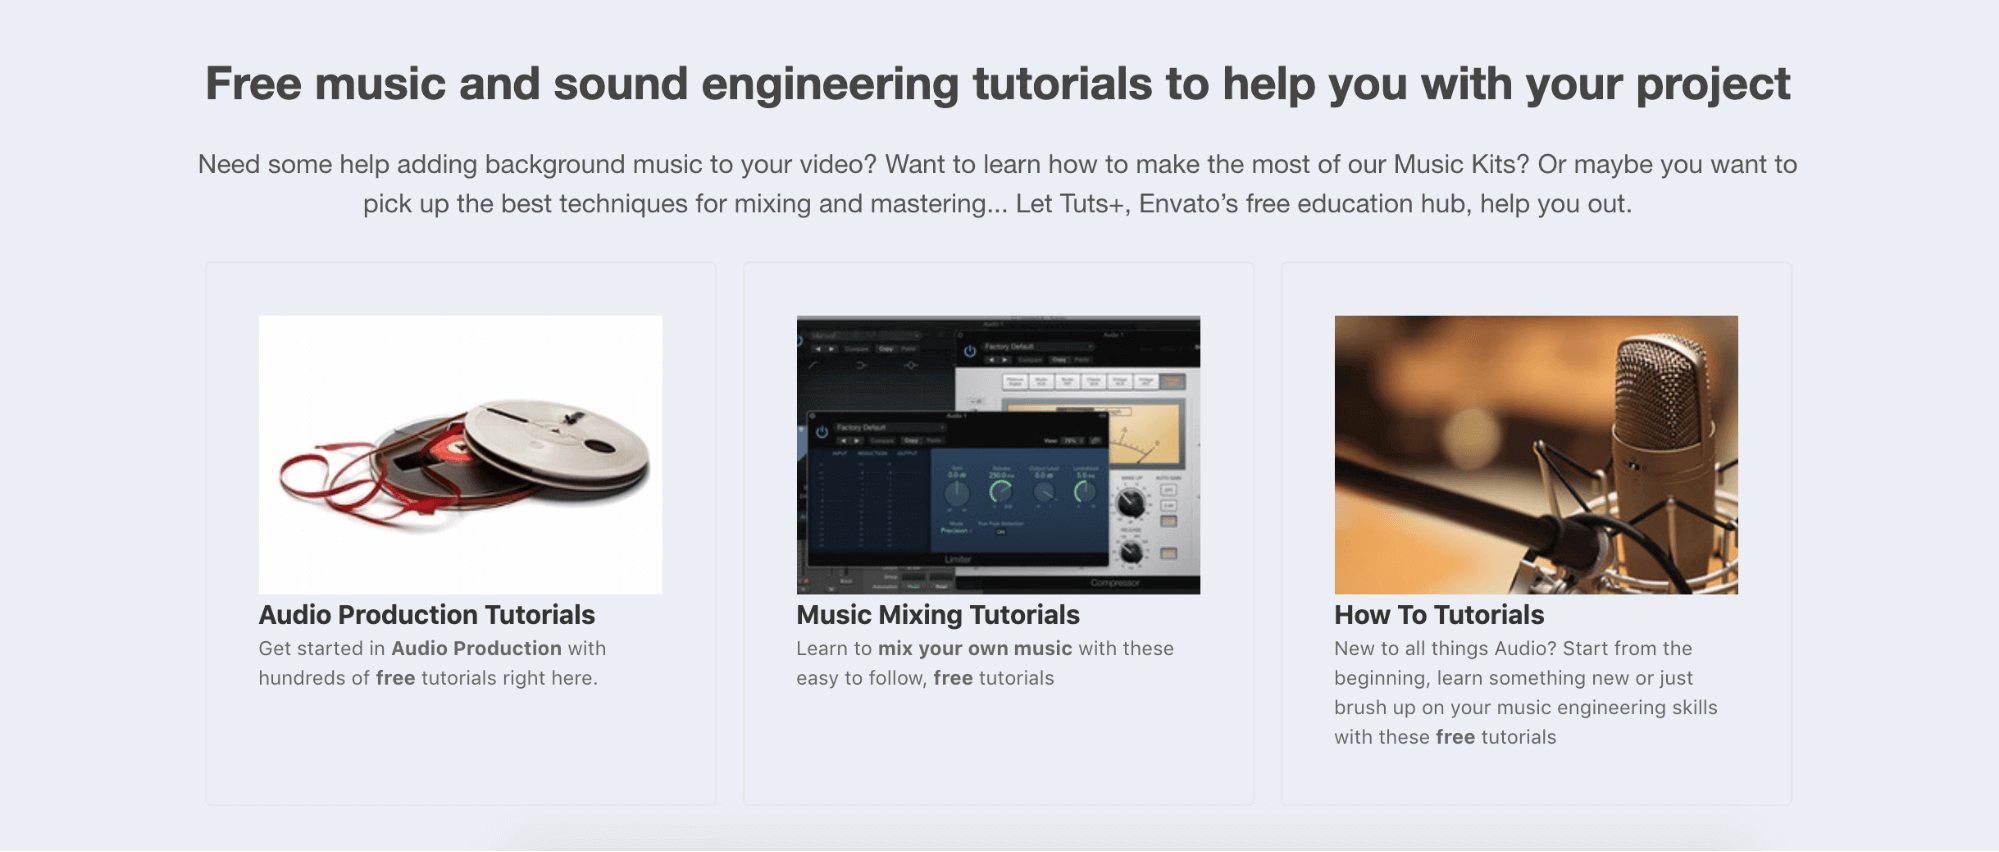 Free advertising music and engineering tutorials